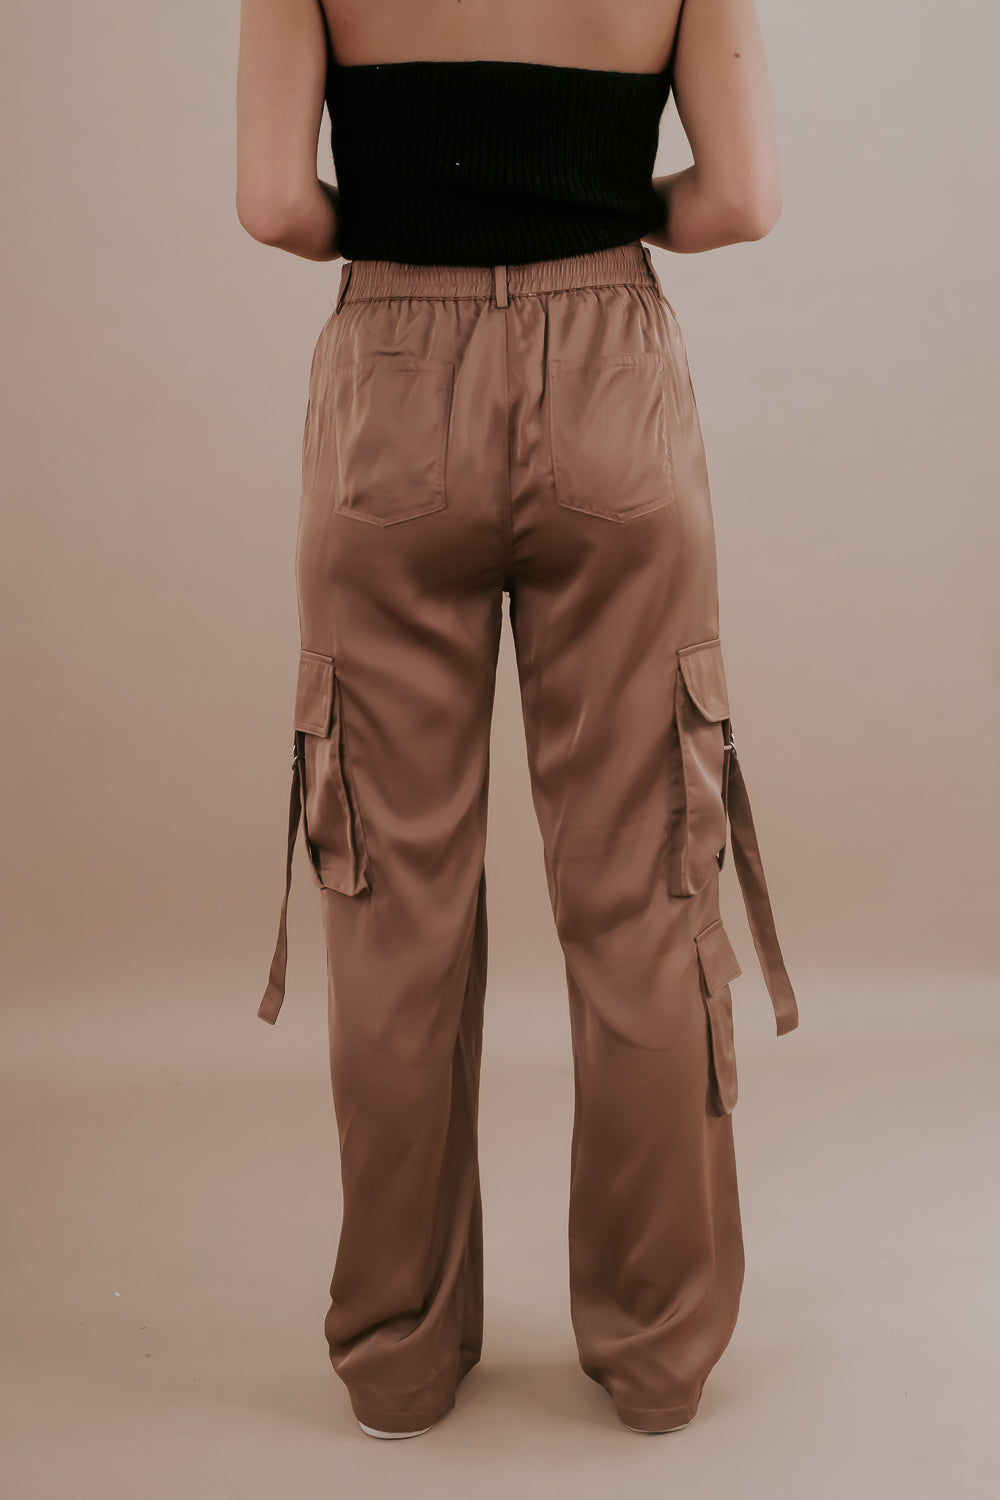 Buy Comfort Lady Cotton Pants online from Vinayak Creations